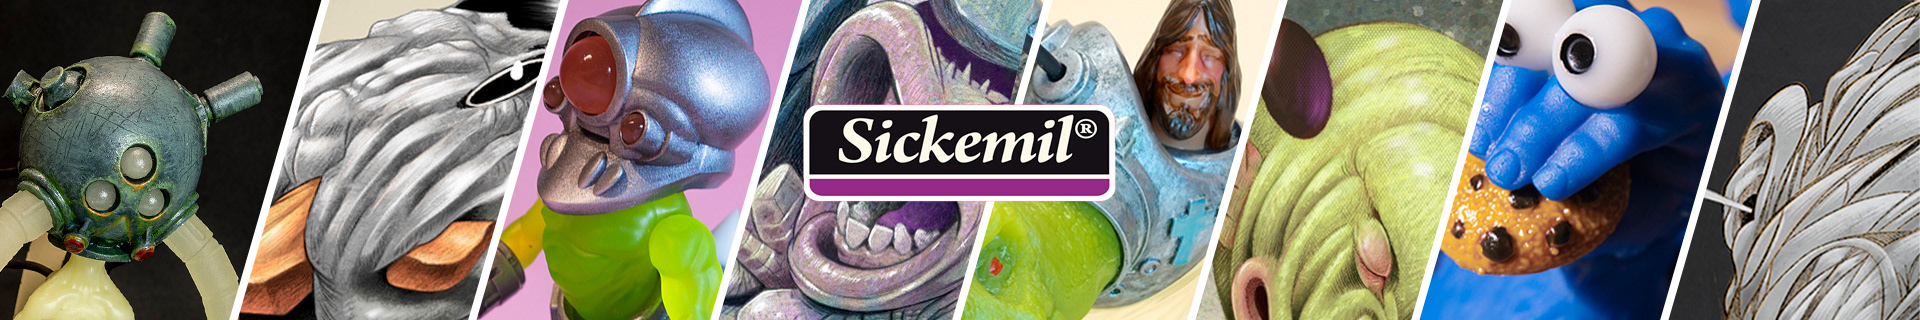 Emilio "Sickemil" Subirá's profile banner